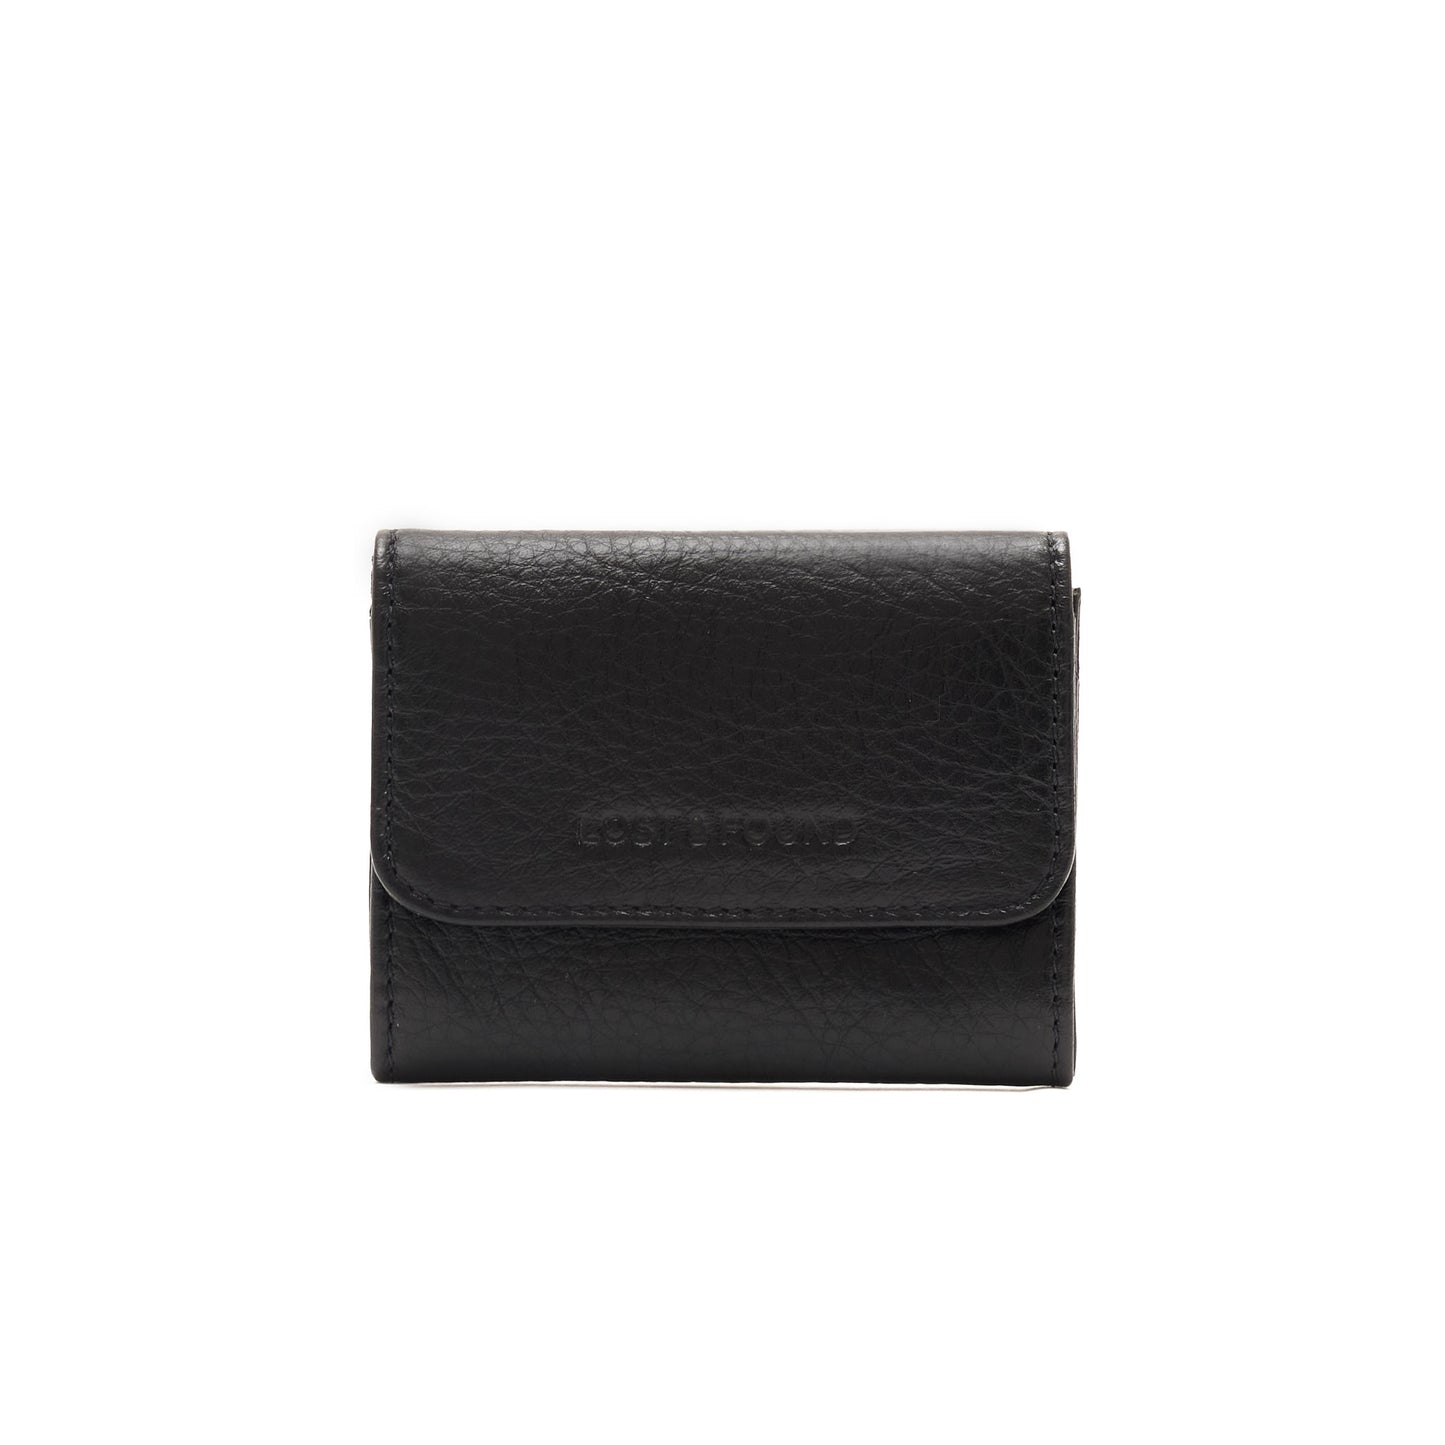 Folding Wallet Small  - Black